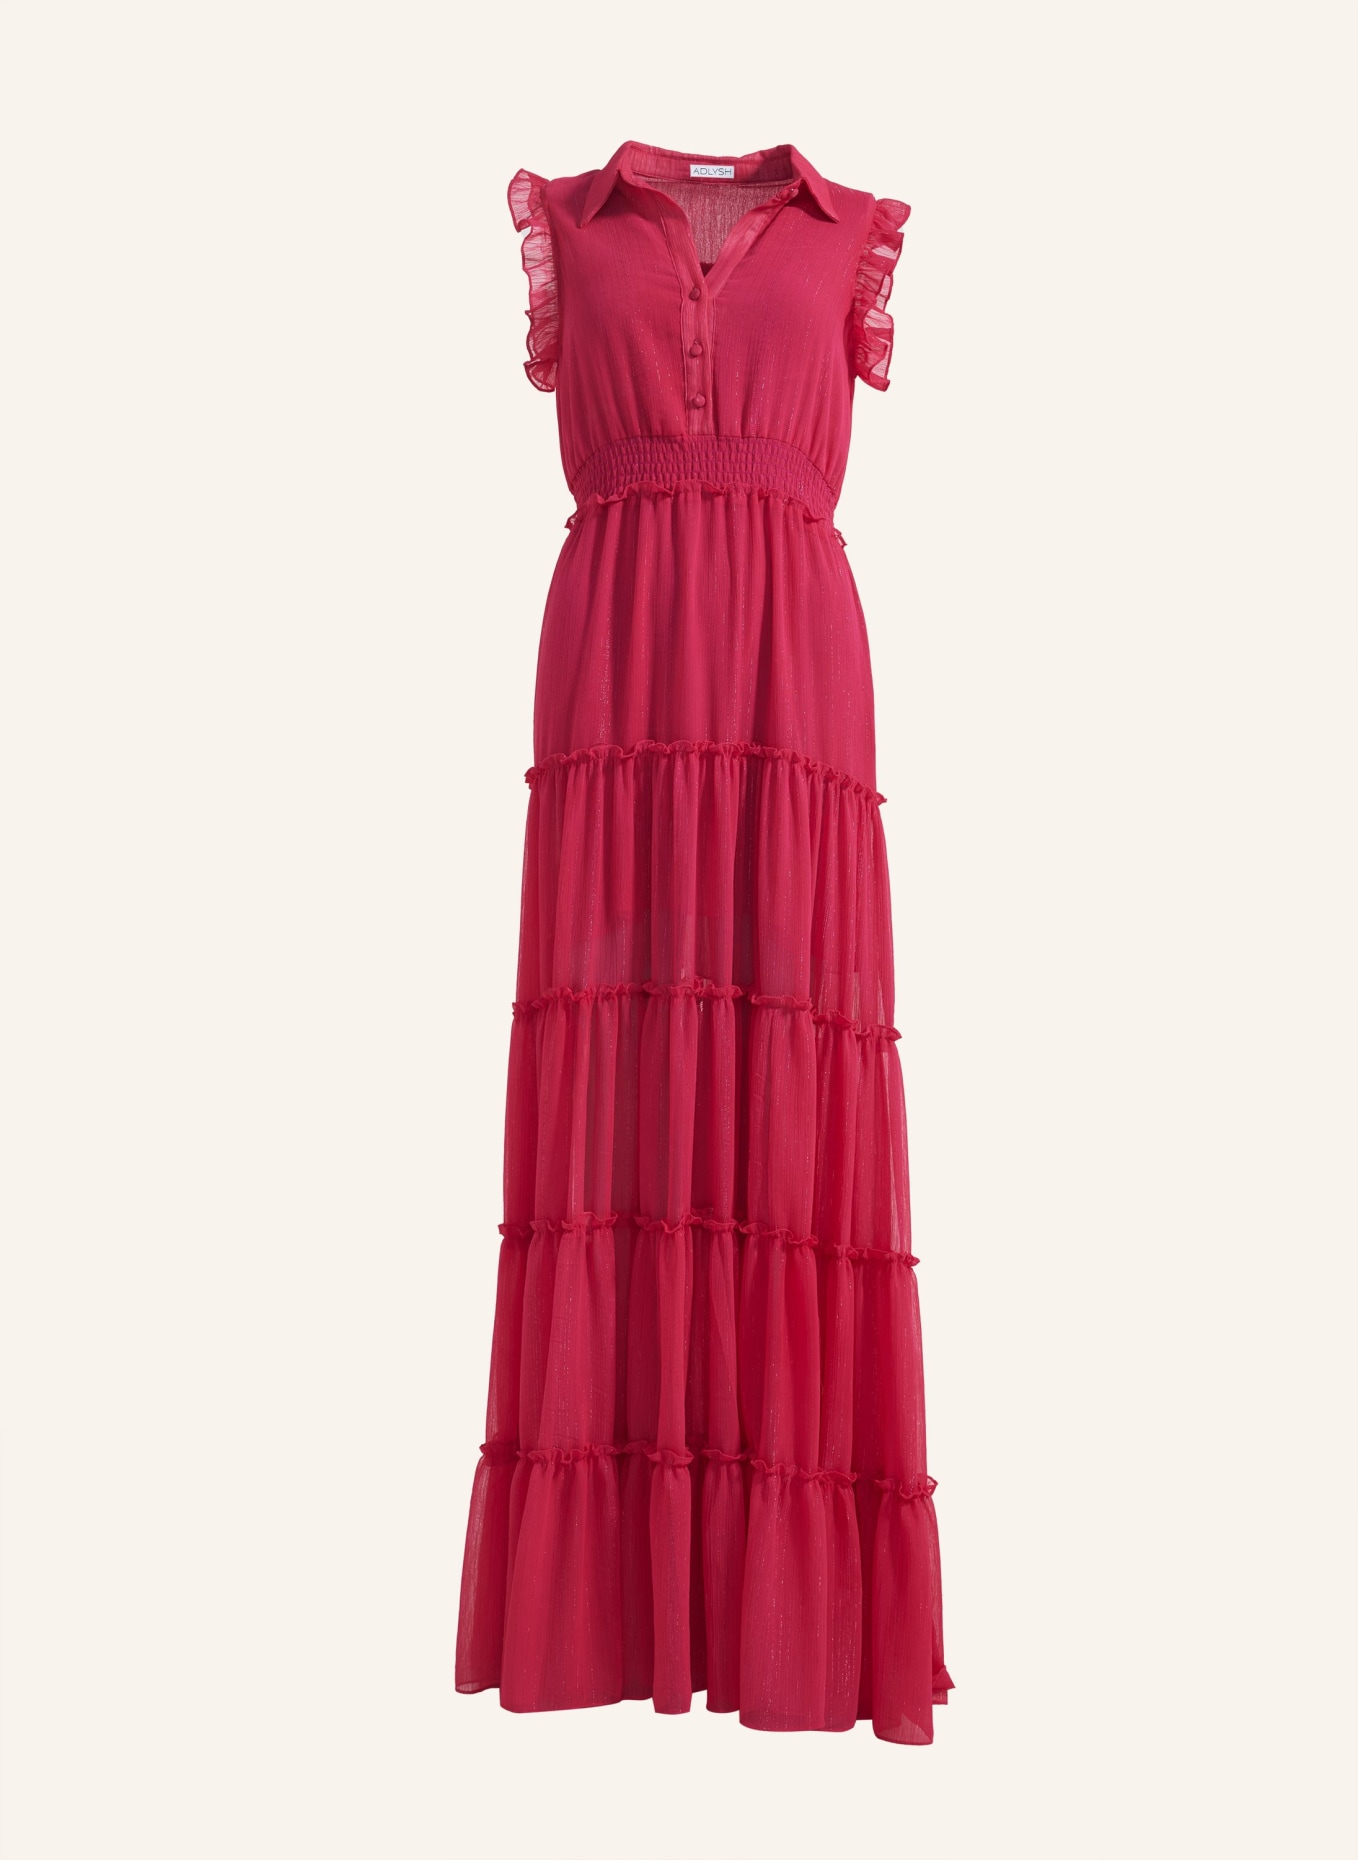 ADLYSH Abendkleid SHINY SUMMER DRESS, Farbe: PINK (Bild 1)